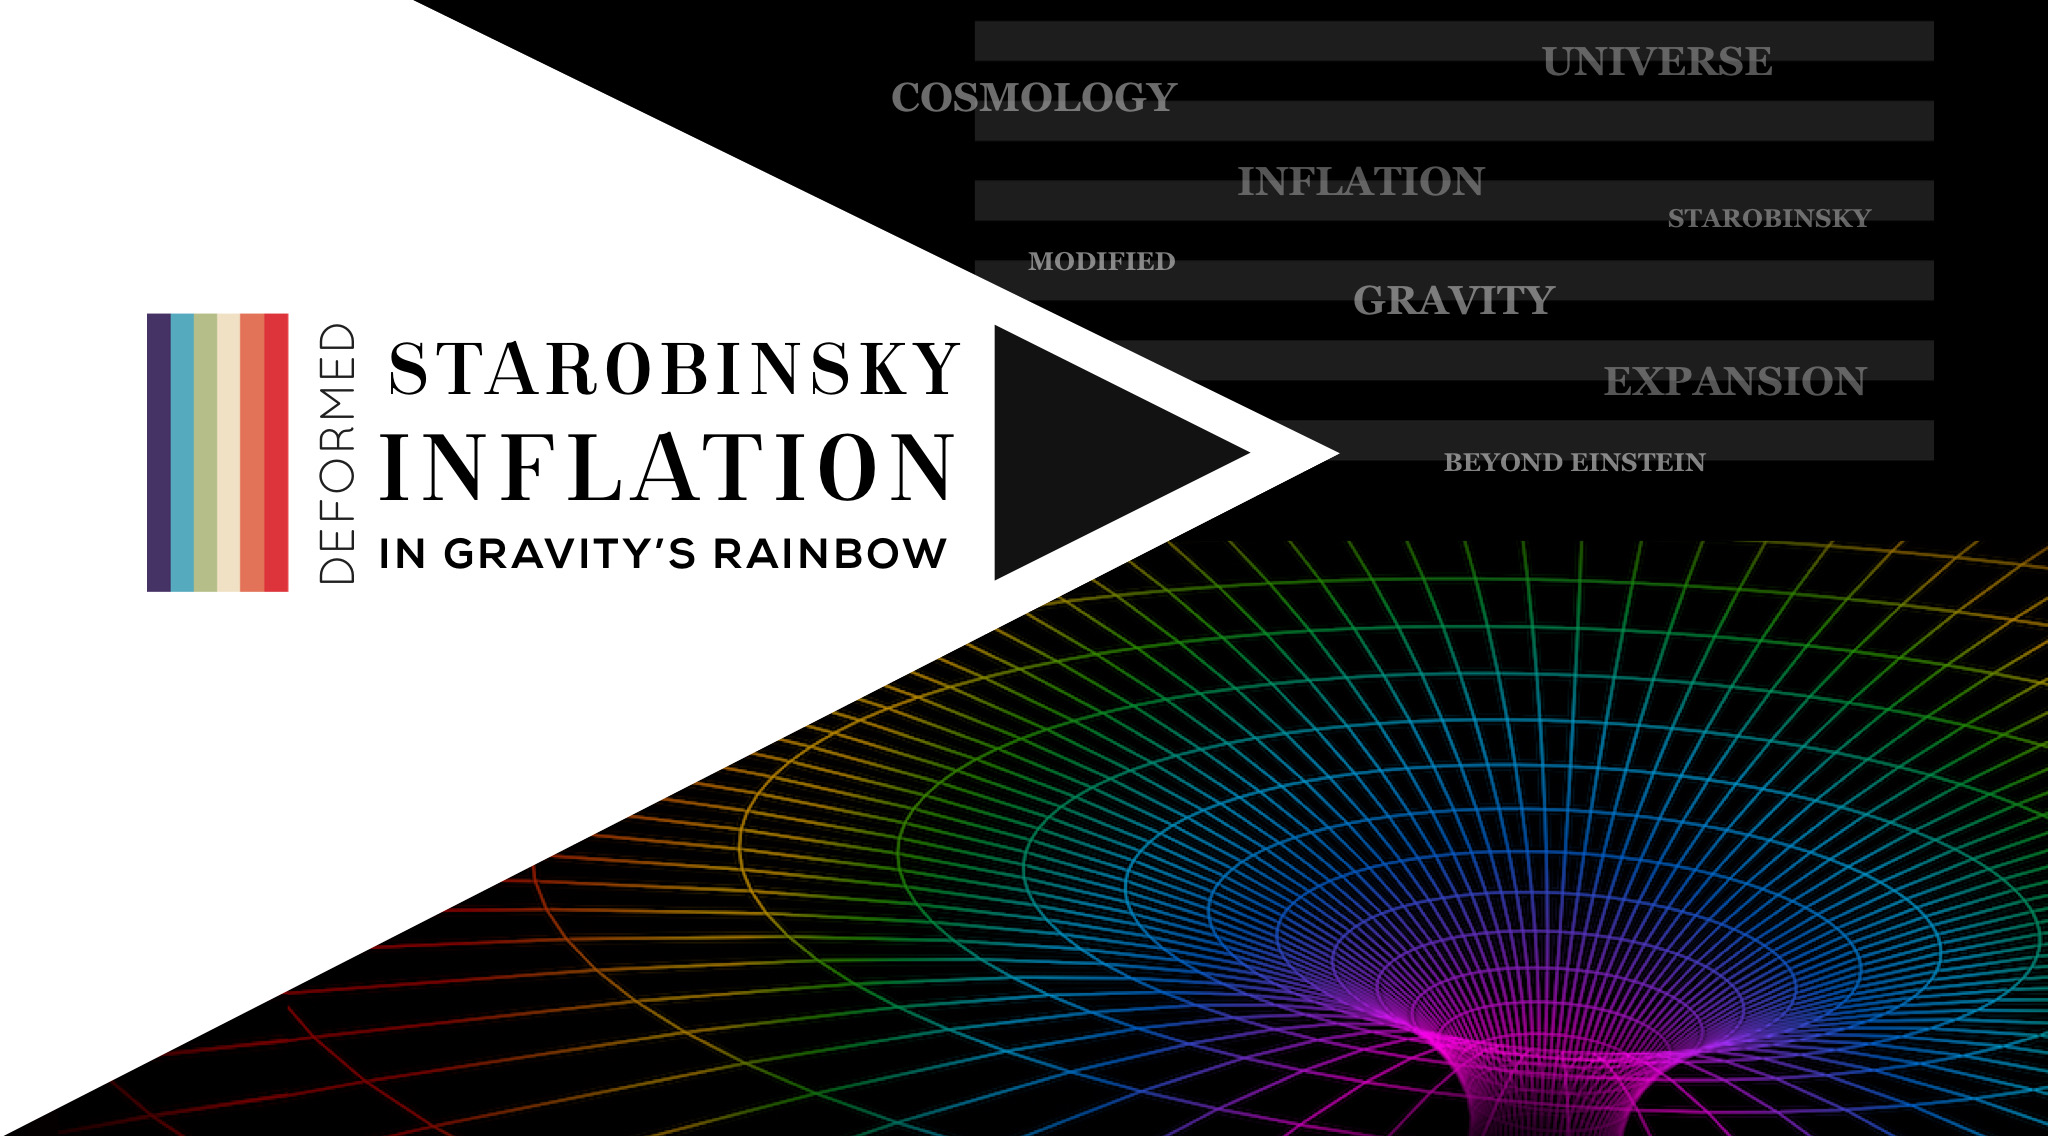 Deformed Starobinky inflation in Gravity's Rainbow -- Cosmic Inflation in Gravity's Rainbow space-time